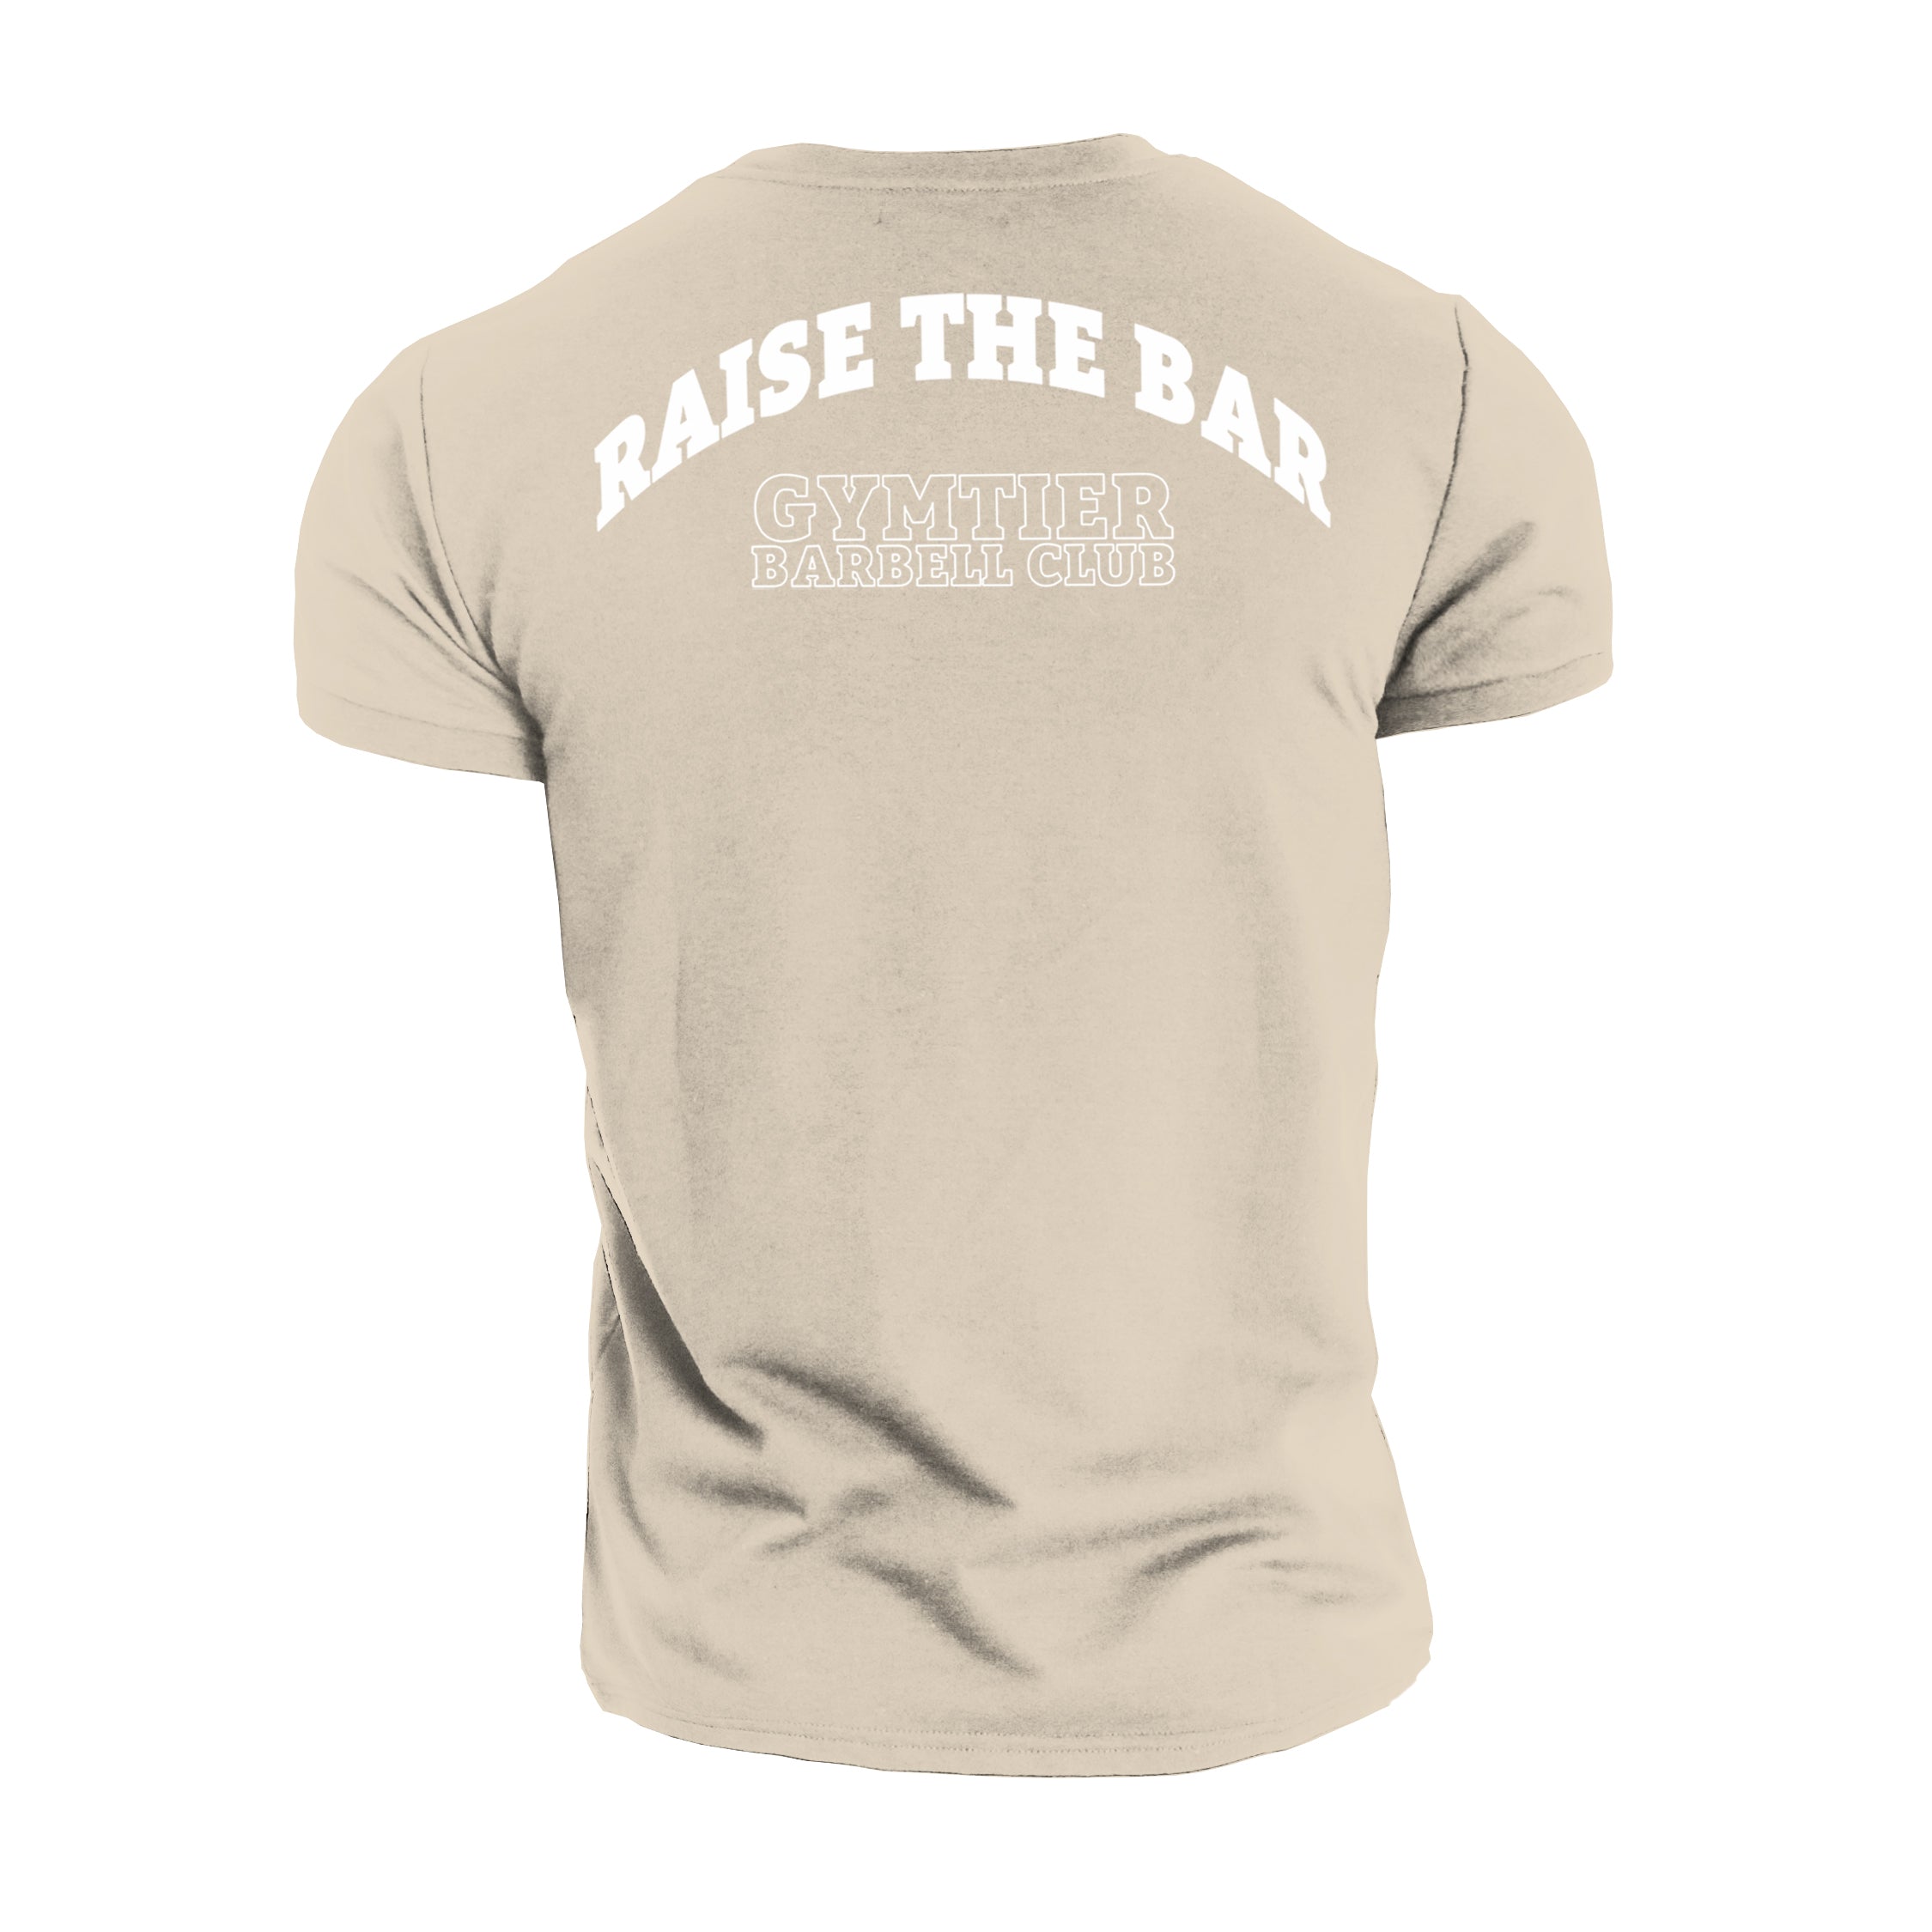 Gymtier Barbell Club - Raise The Bar - Gym T-Shirt